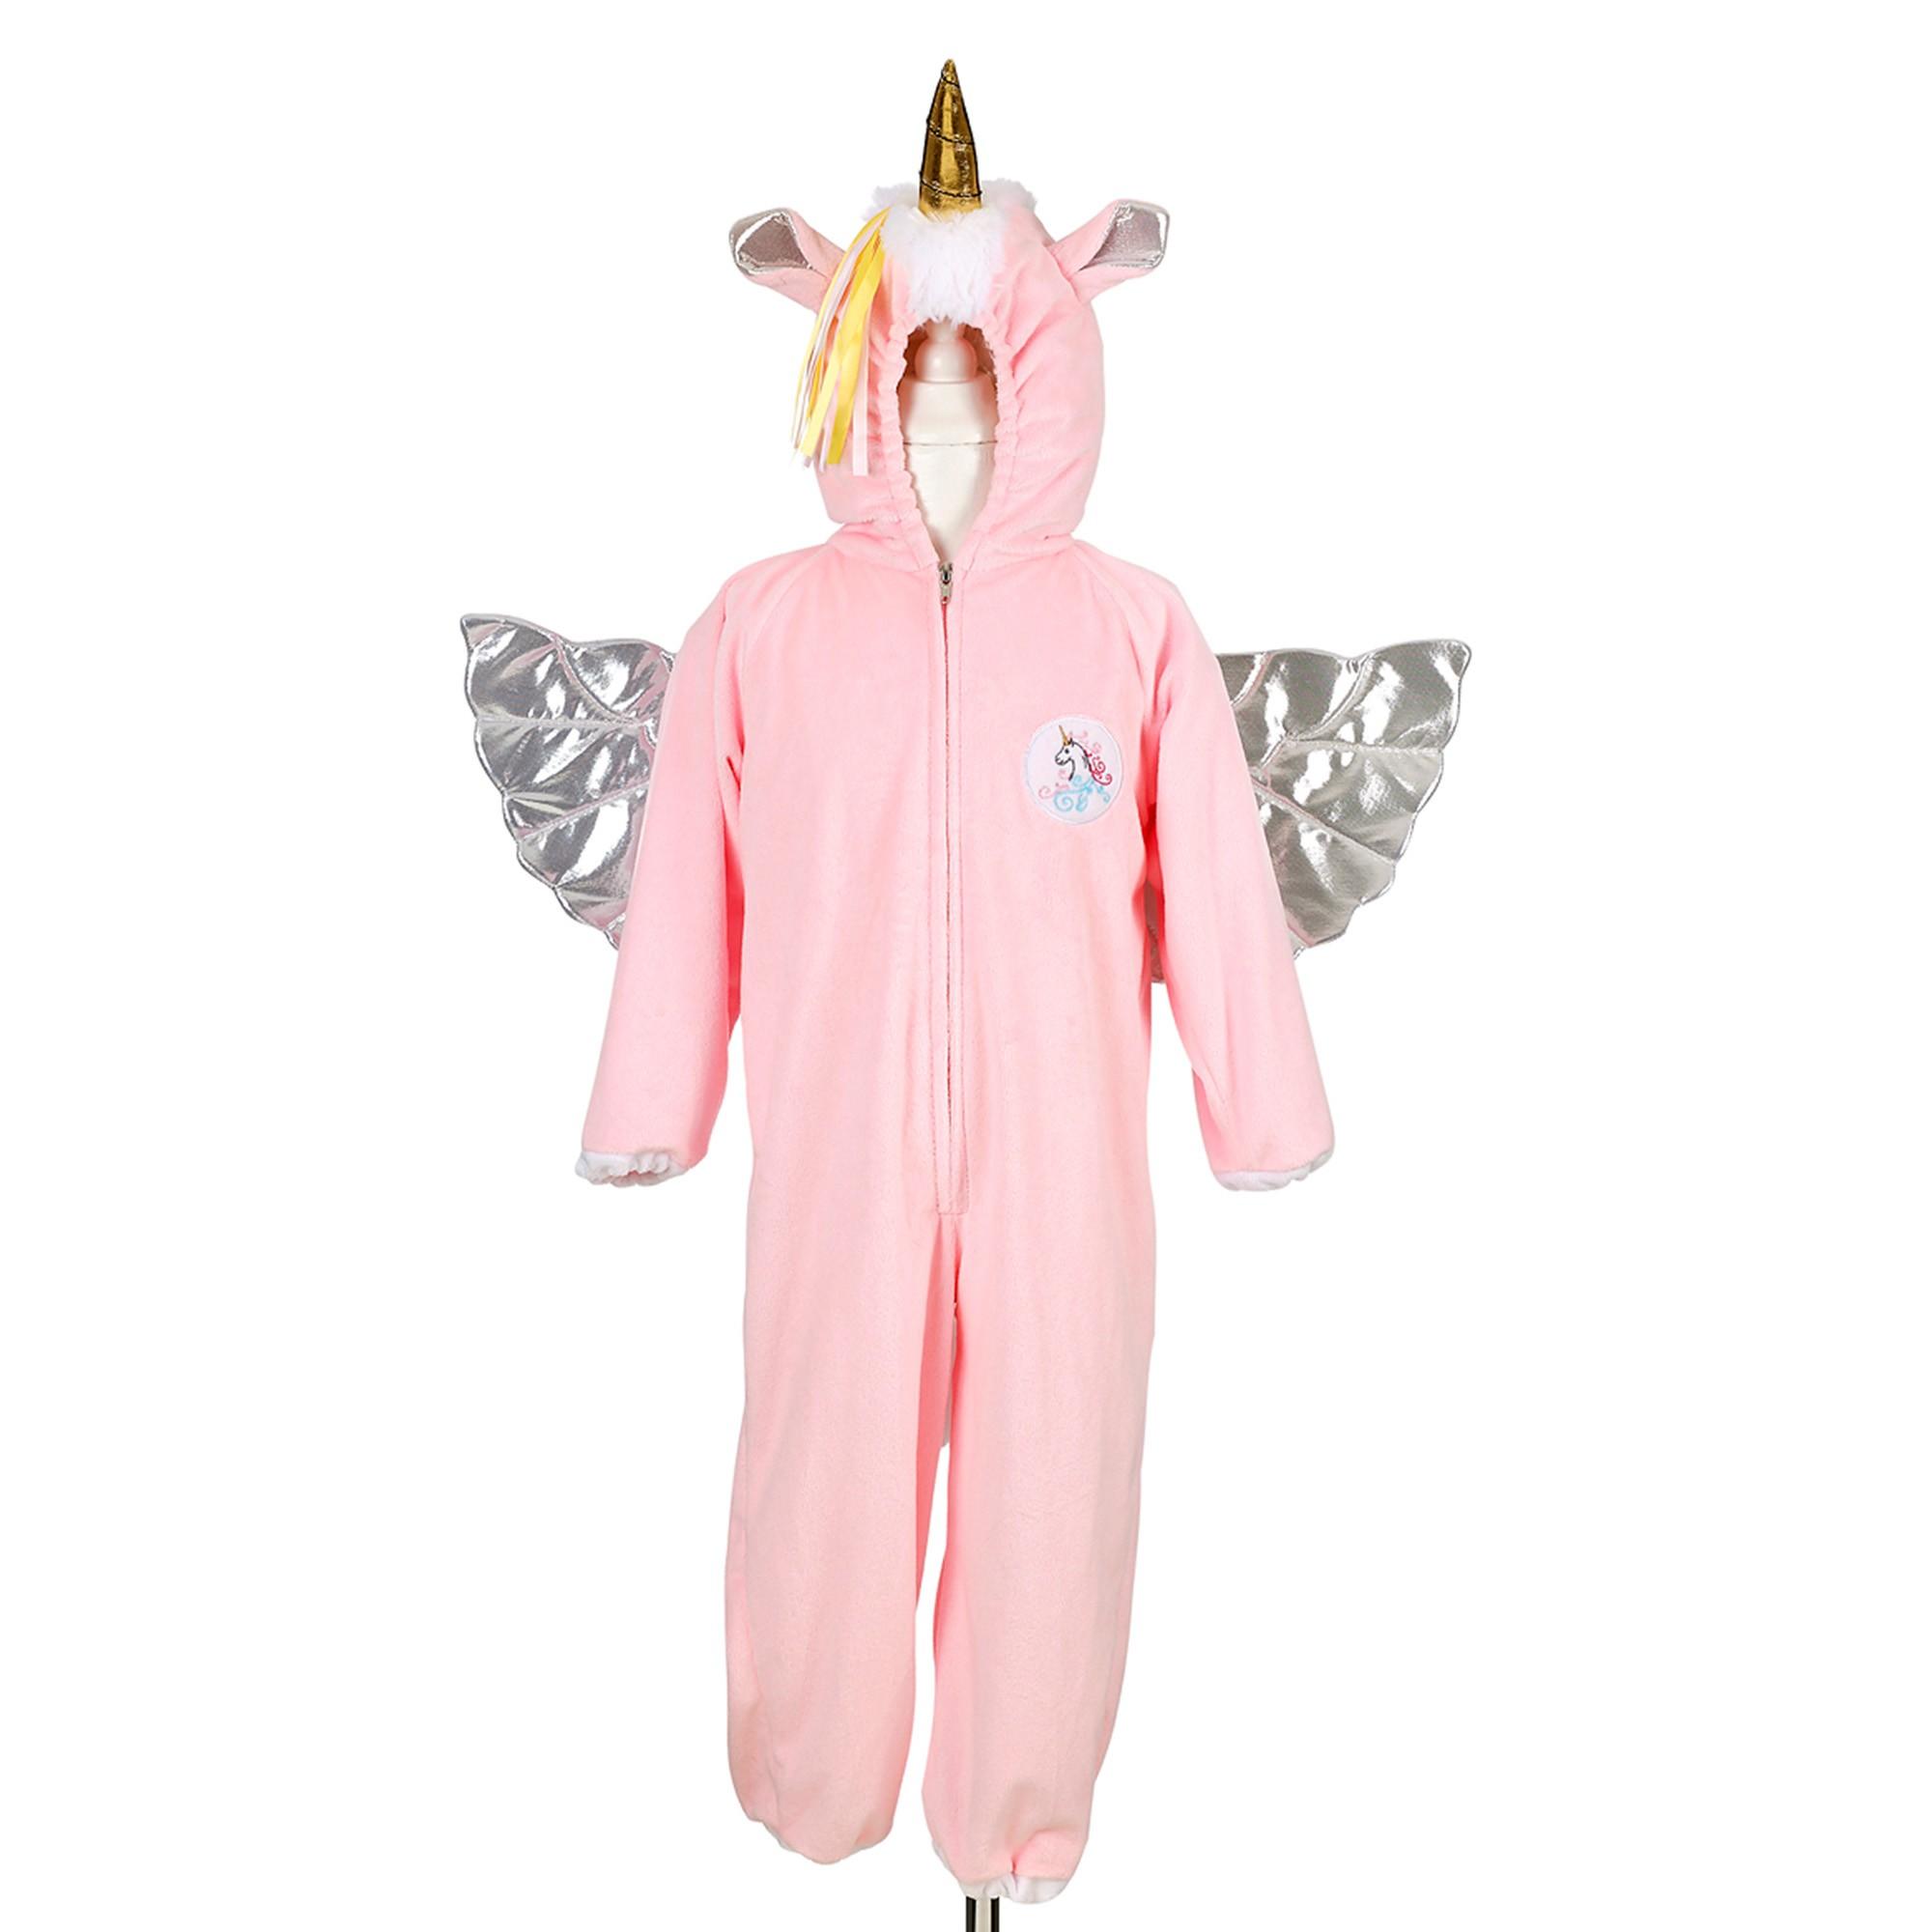 Souza - Unicorn jumpsuit, pink, 7-8 yrs, 122-128 cm (1 pc)